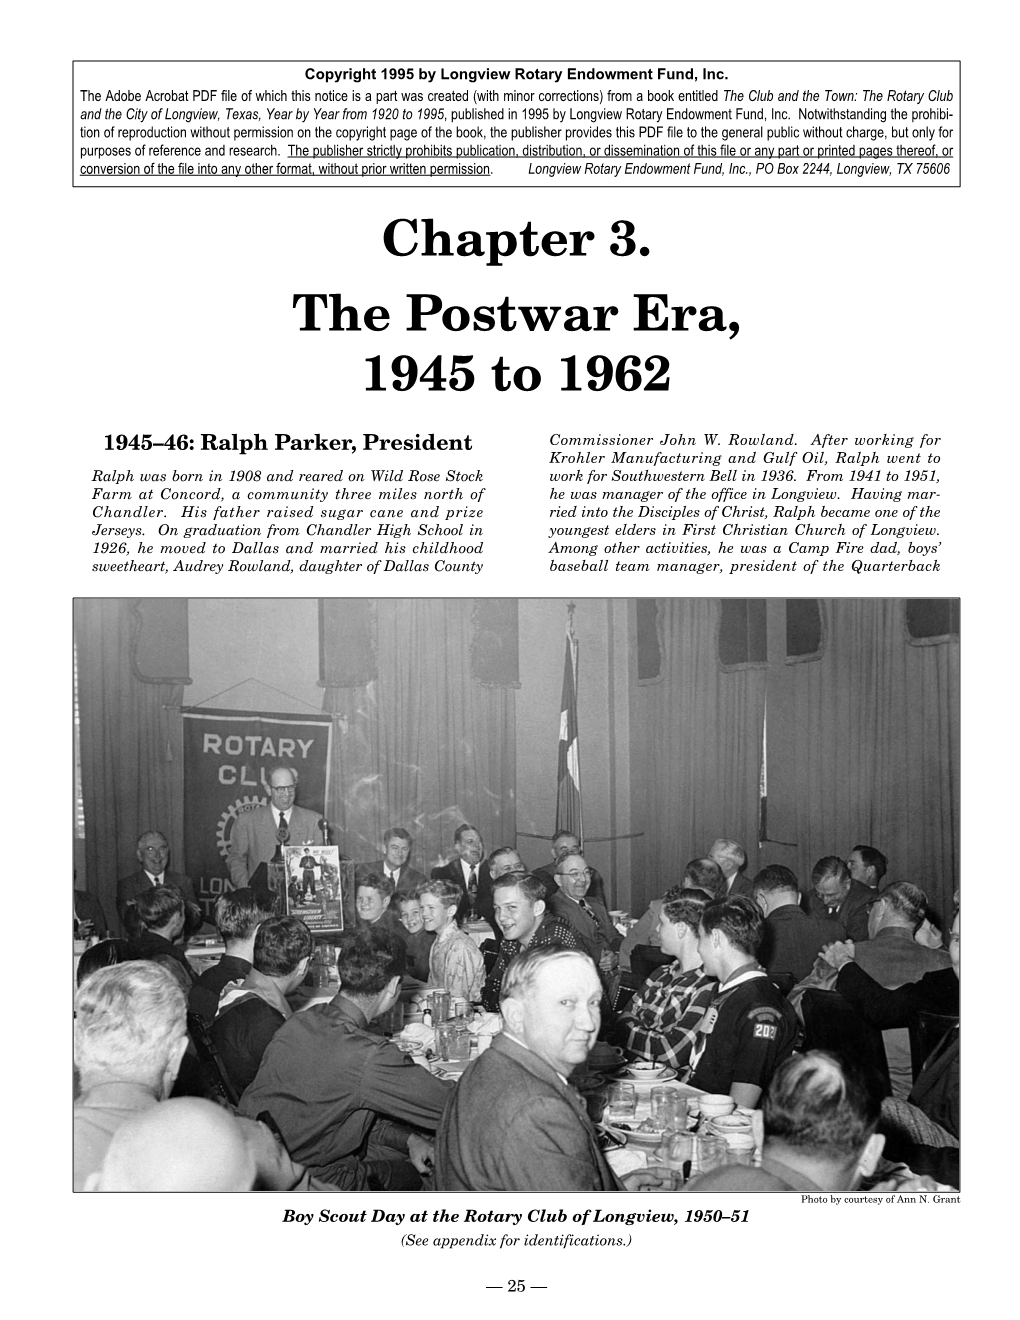 Chapter 3. the Postwar Era, 1945 to 1962